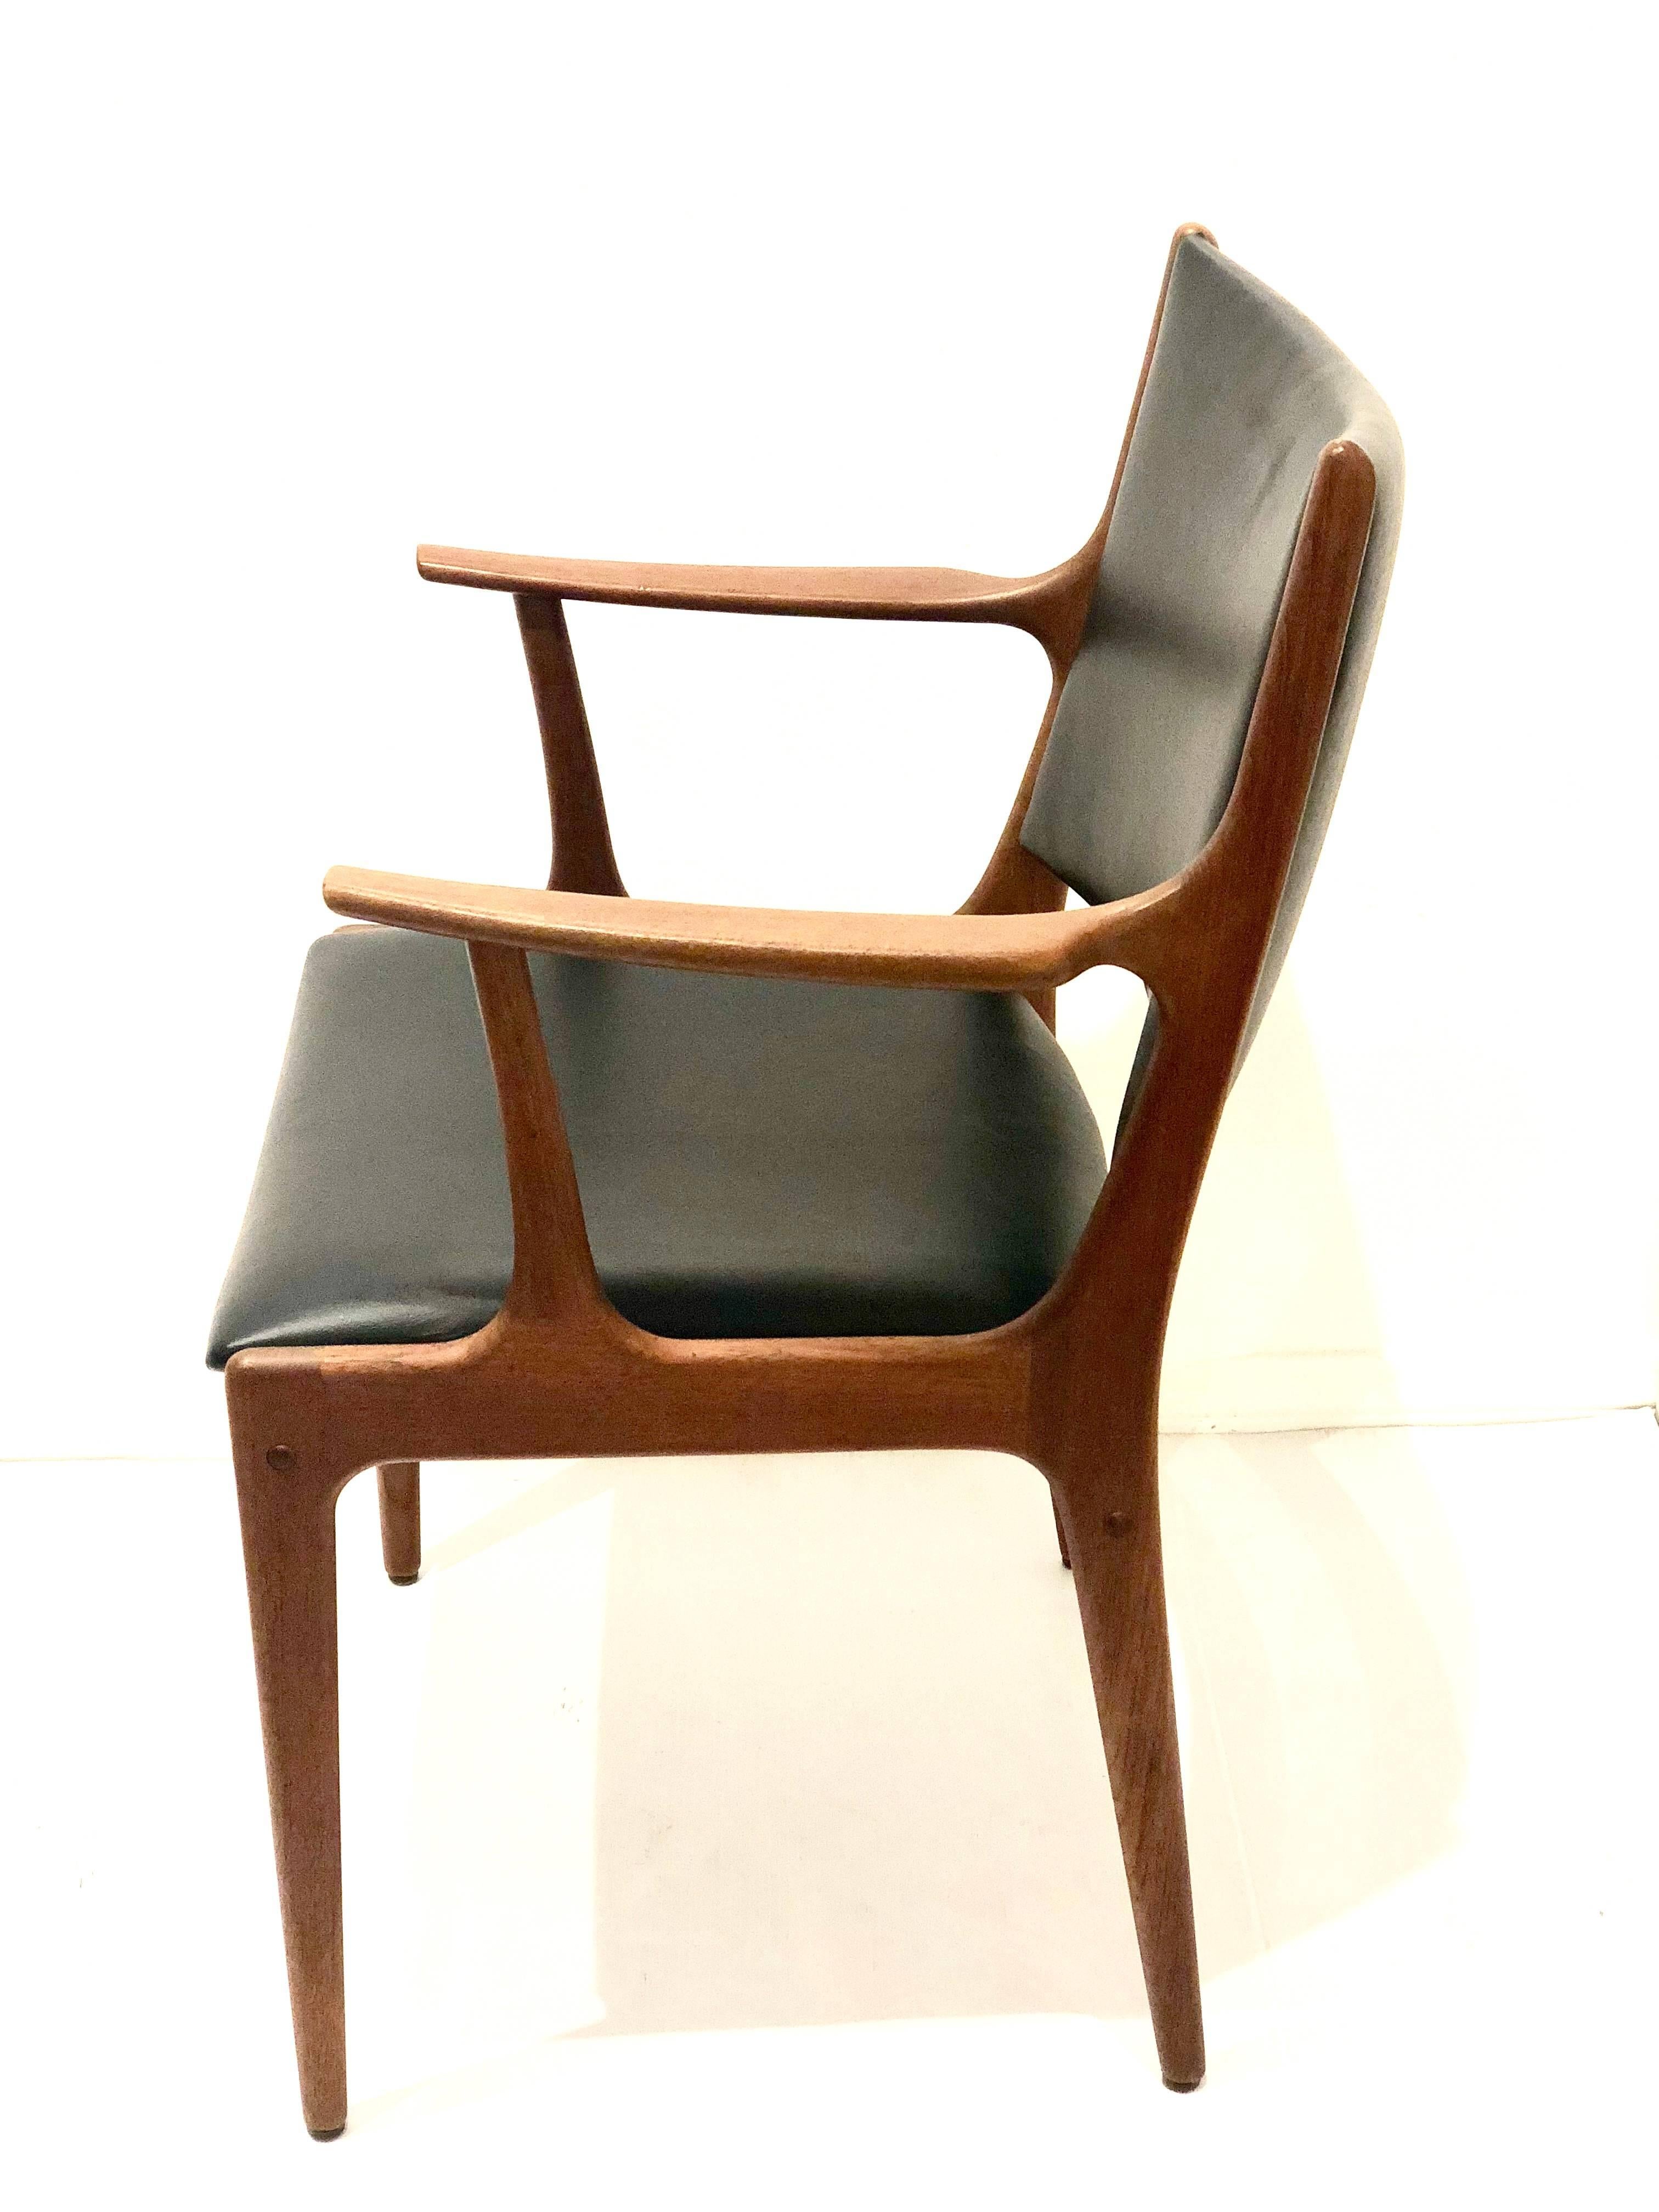 Midcentury Danish teak dining armchair by Johannes Andersen for Uldum Møbelfabrik. Model UM85. Seat upholstery in black naugahyde. Freshly refinished.